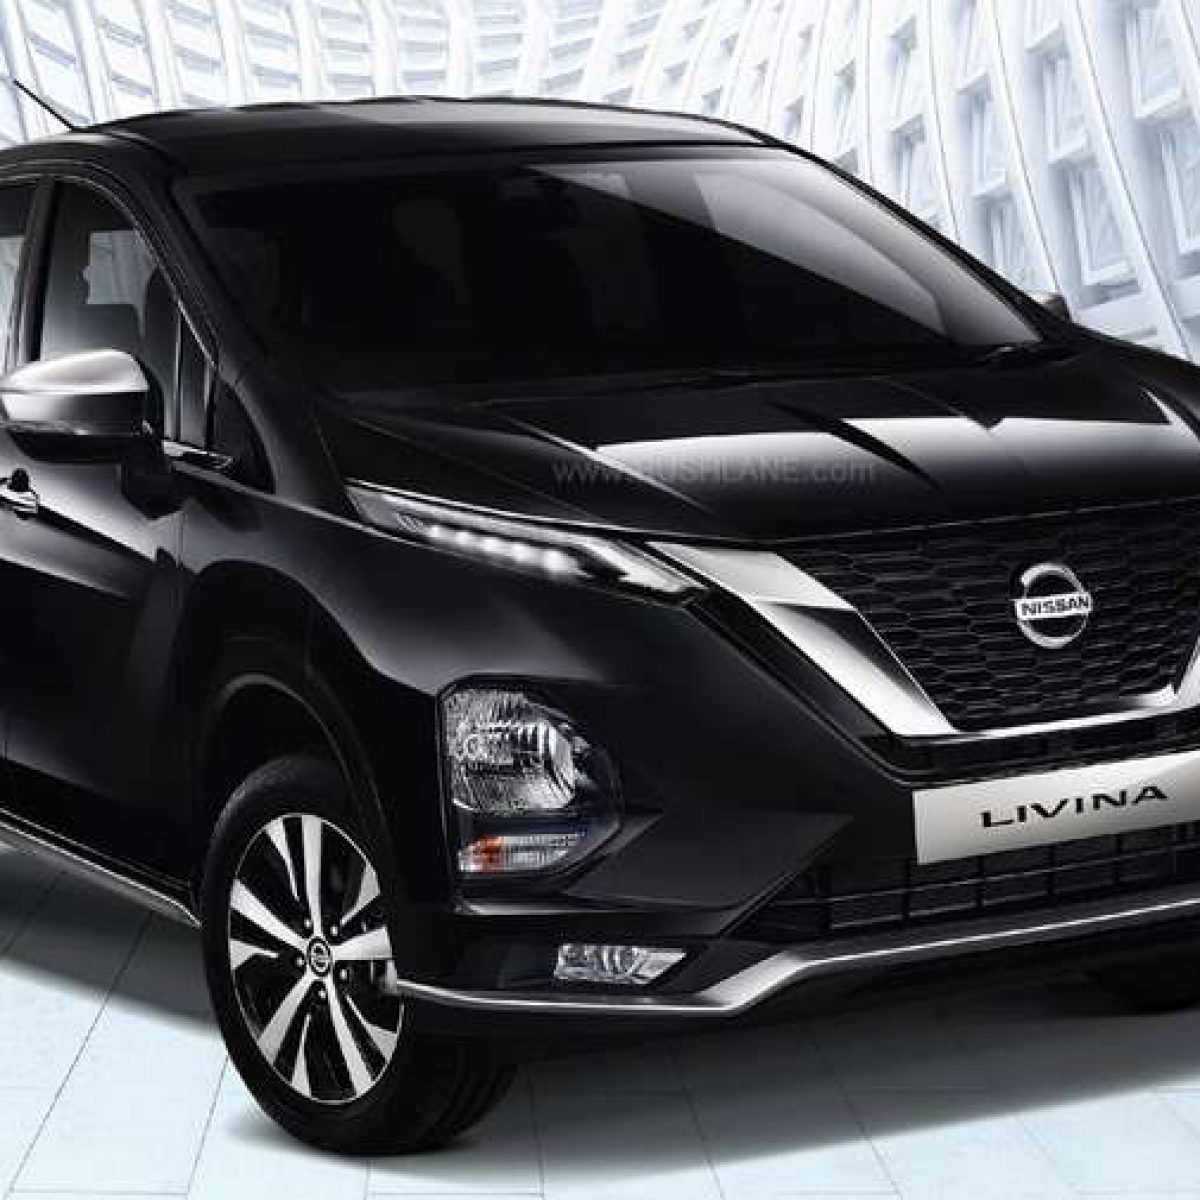 New Nissan Livina 7 Seat Mpv Debuts To Take On Suzuki